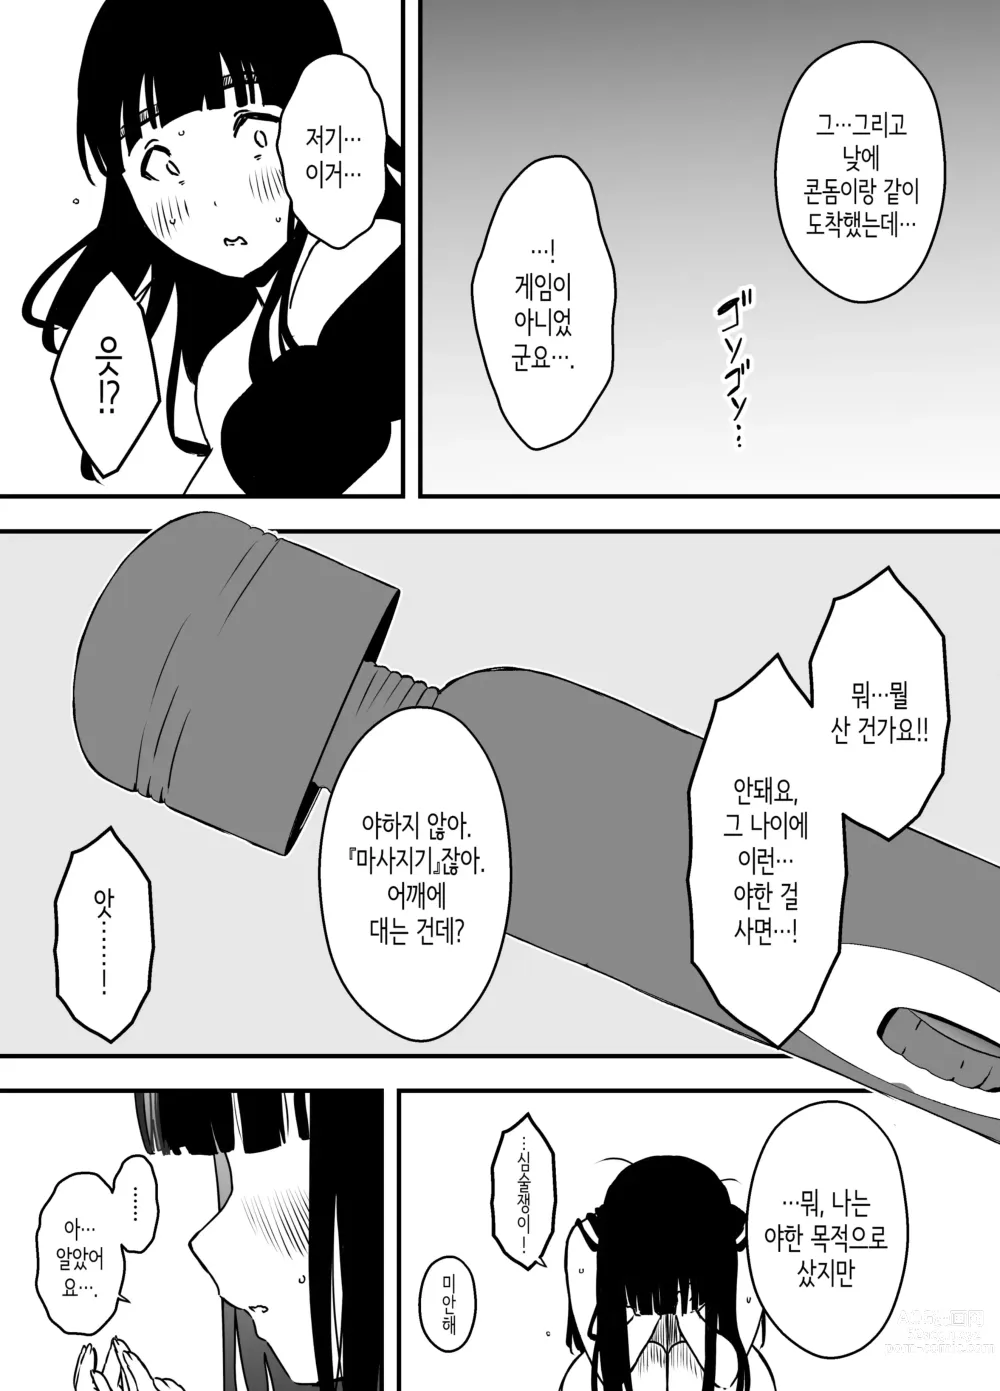 Page 7 of doujinshi 의붓 누나와의 7일간 생활 5